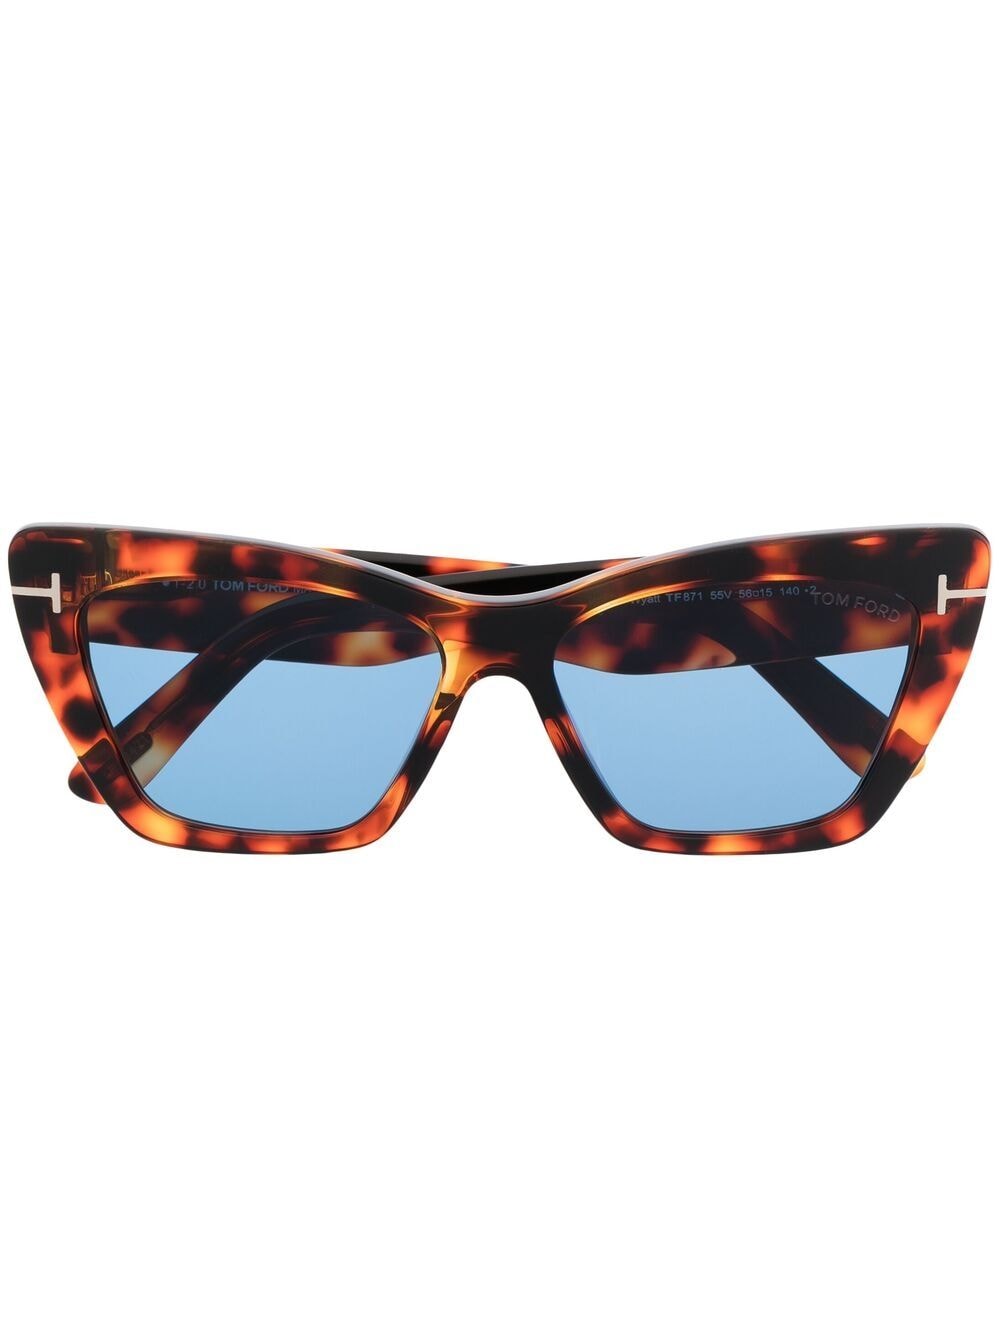 TOM FORD Eyewear Whyatt butterfly-frame sunglasses - Brown von TOM FORD Eyewear